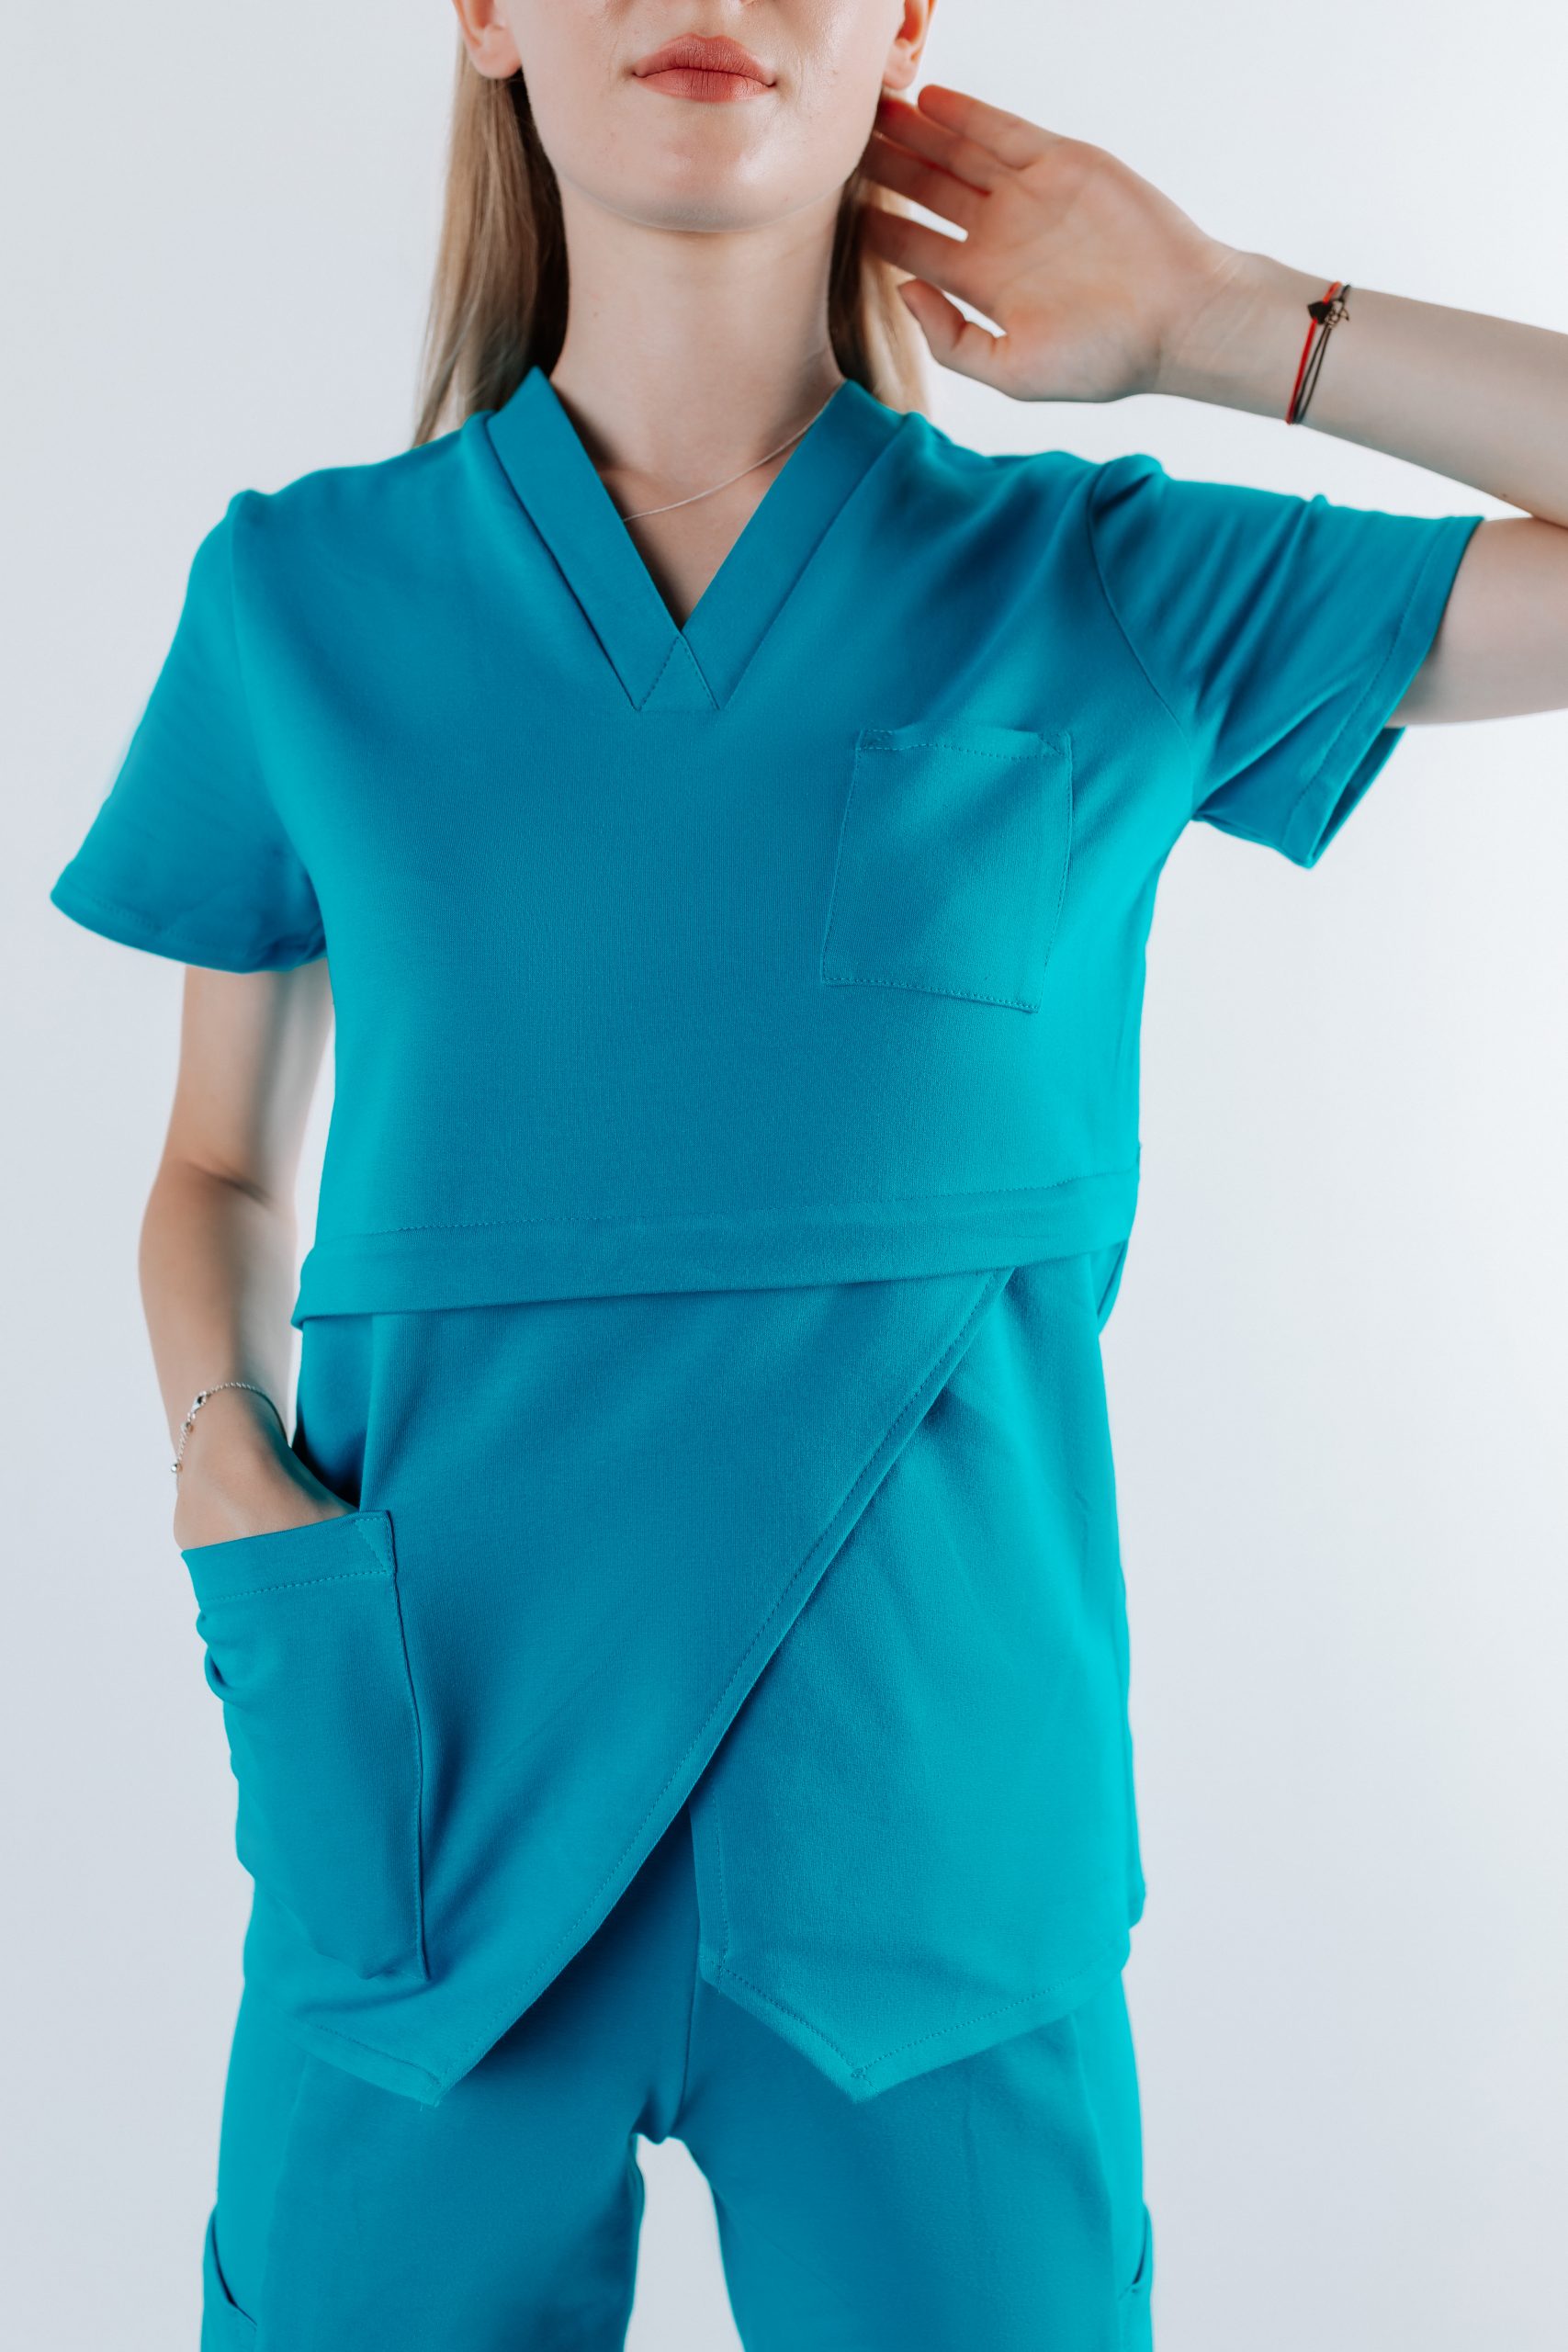 Doamna doctor ce poarta o bluza edgy de scrub medical albastru azure.Uniforma medicala albastru azure este din bumbac 95% si elastan 5% cu croiala fit.